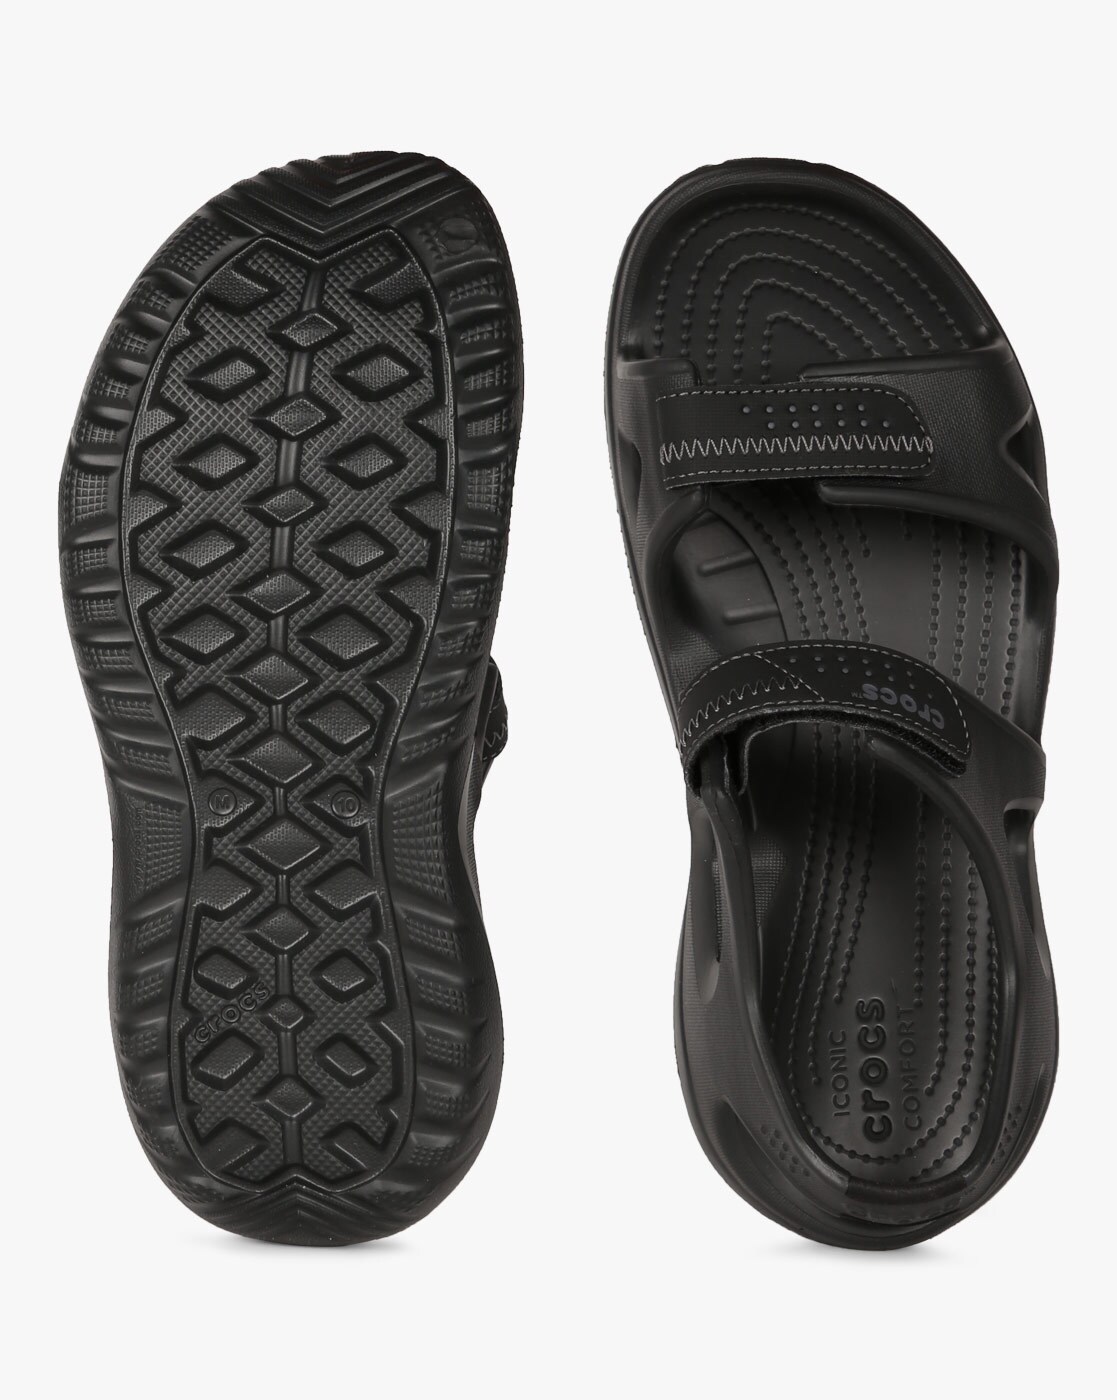 crocs swiftwater river slingback sandals